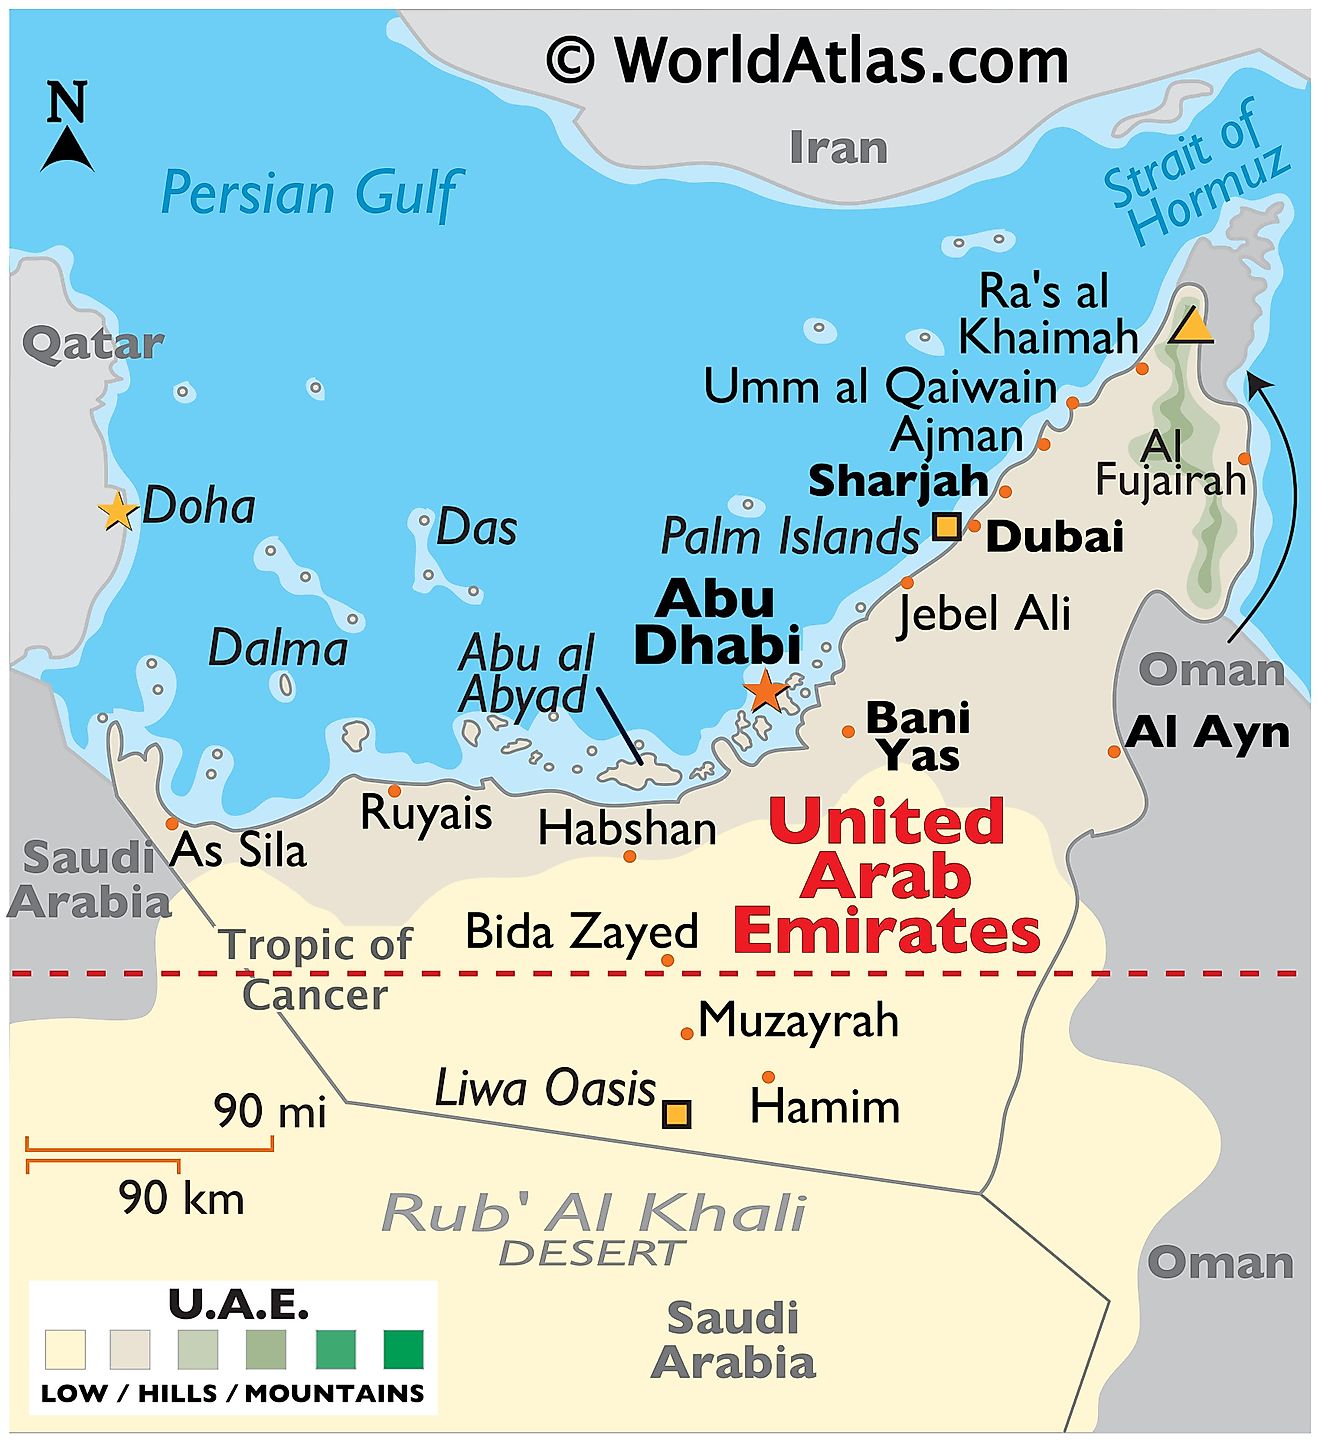 Physical Map of the United Arab Emirates (UAE) showing the international borders, relief, the Rub' Al Khali Desert, Lisa Oasis, Palm Islands, etc.